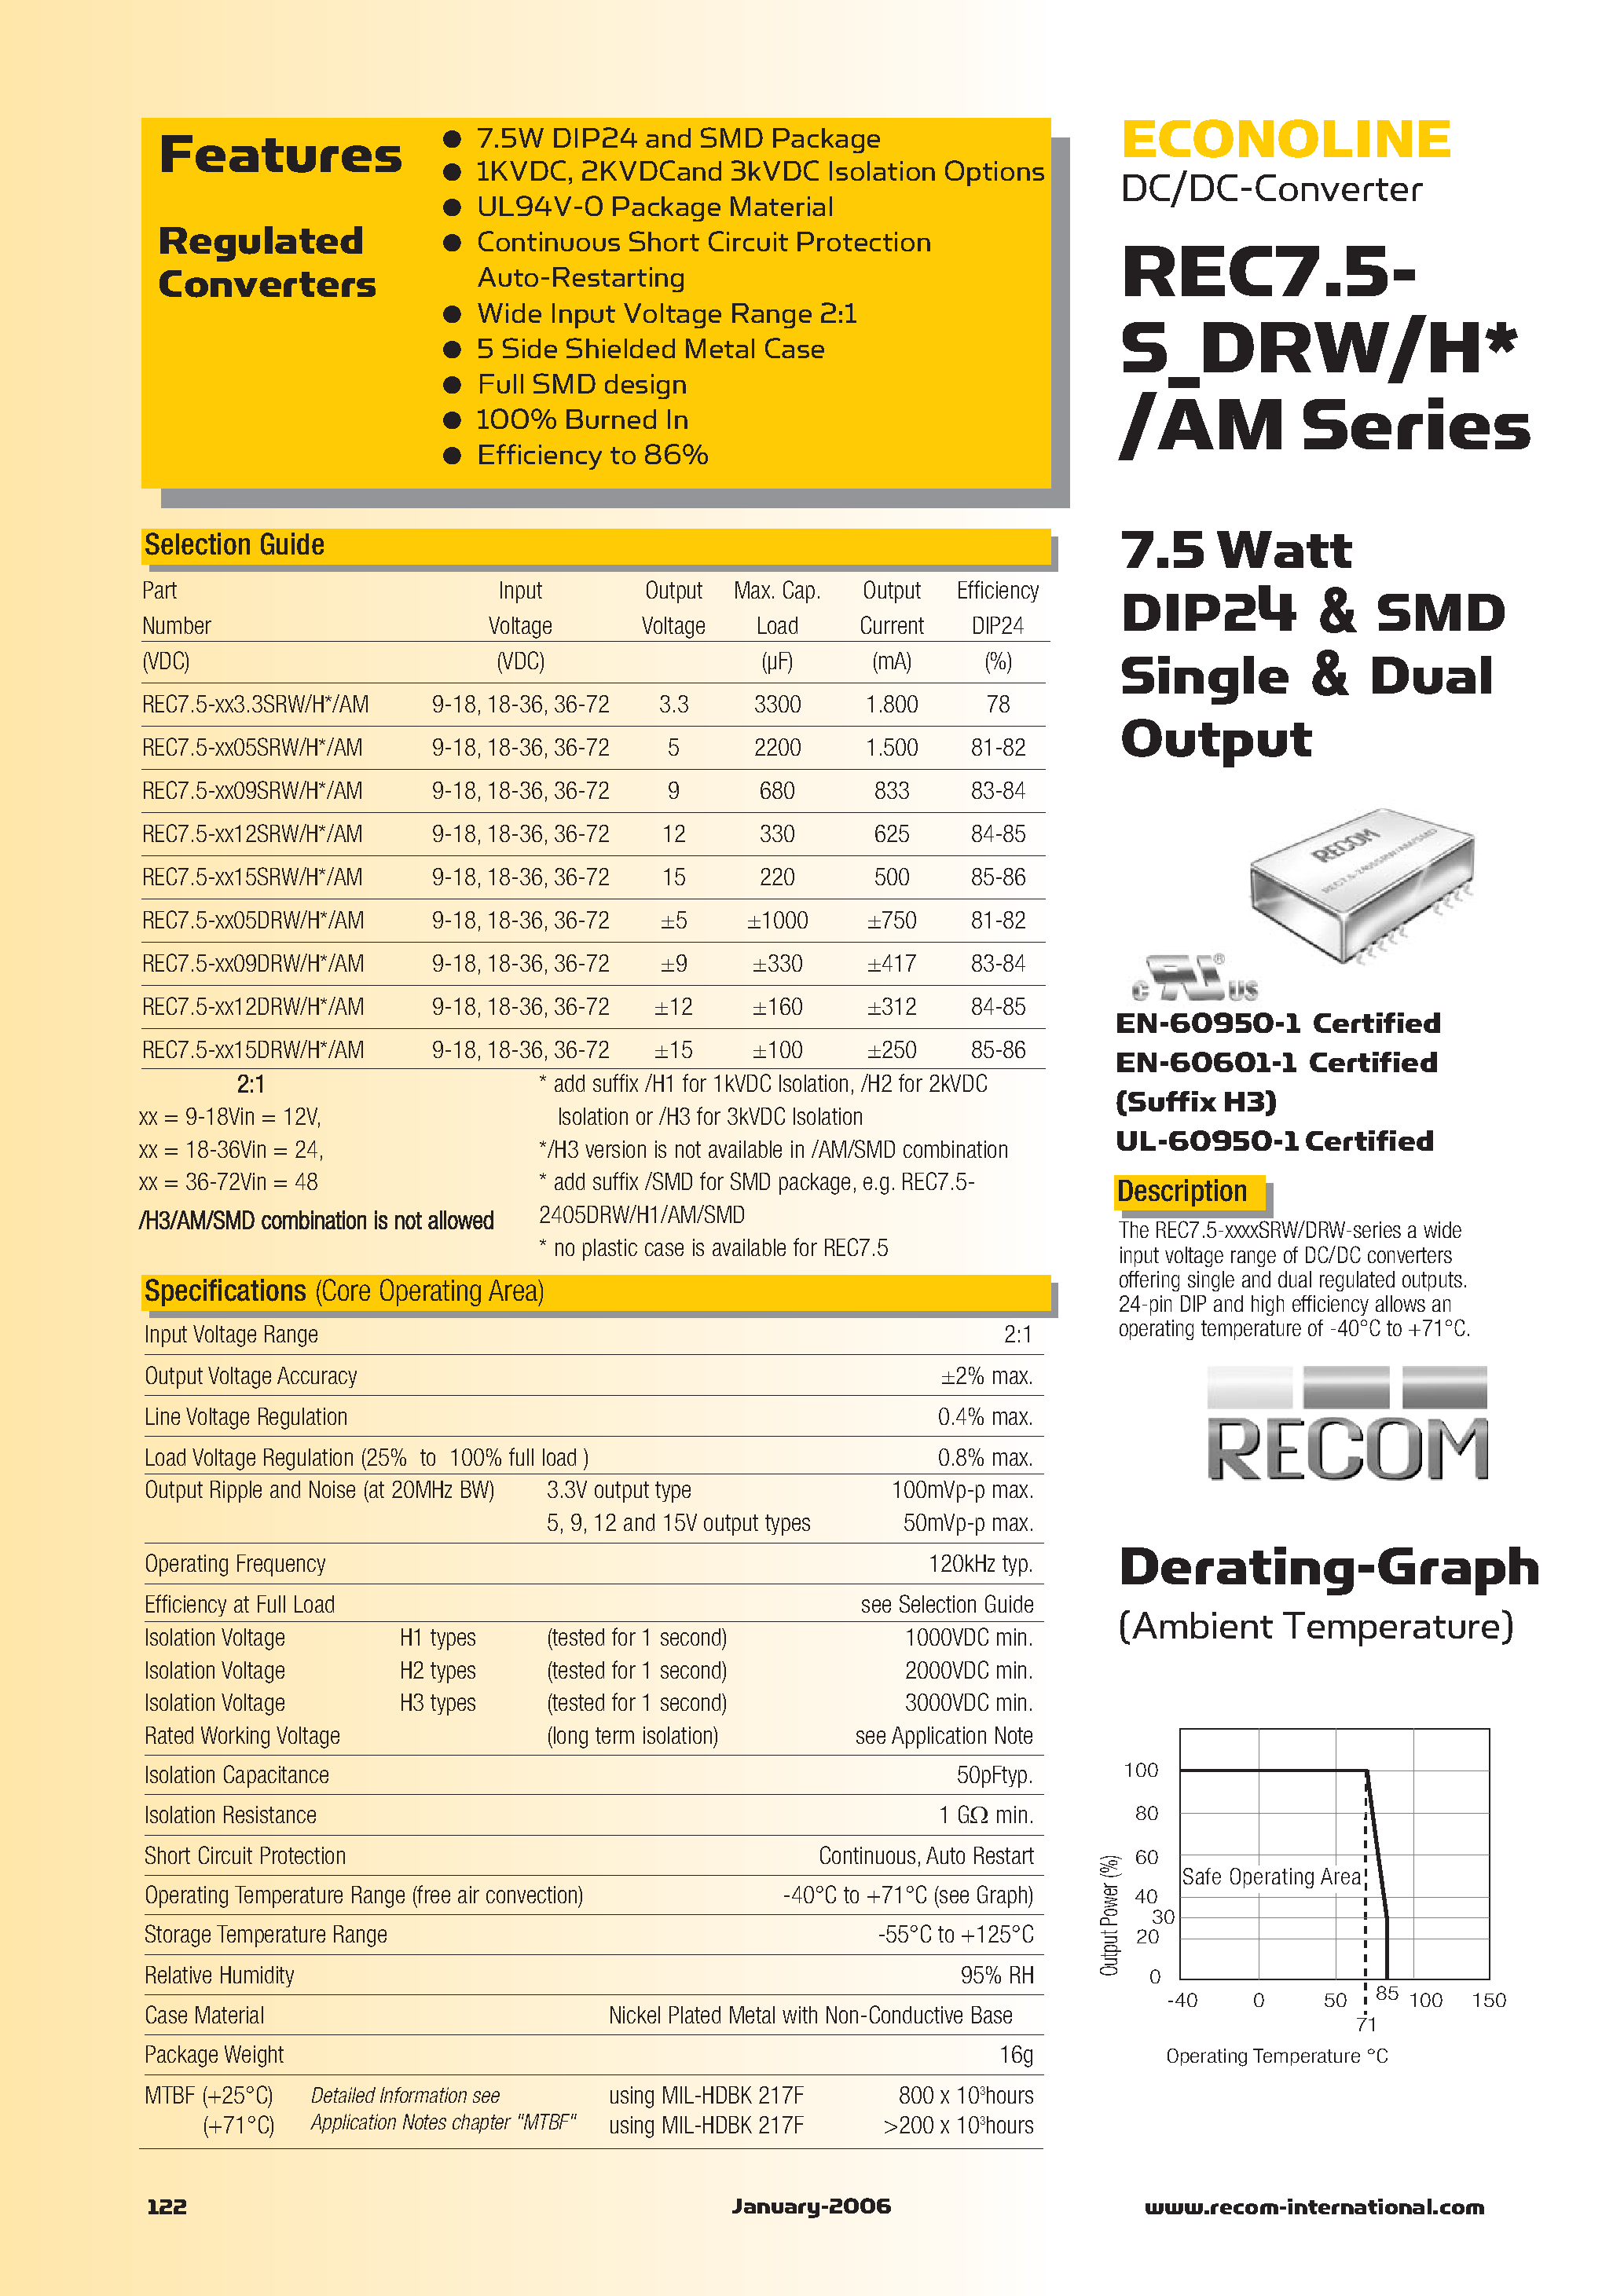 Datasheet REC7.5-xxxx - 7.5 Watt DIP24 & SMD Single & Dual Output page 1